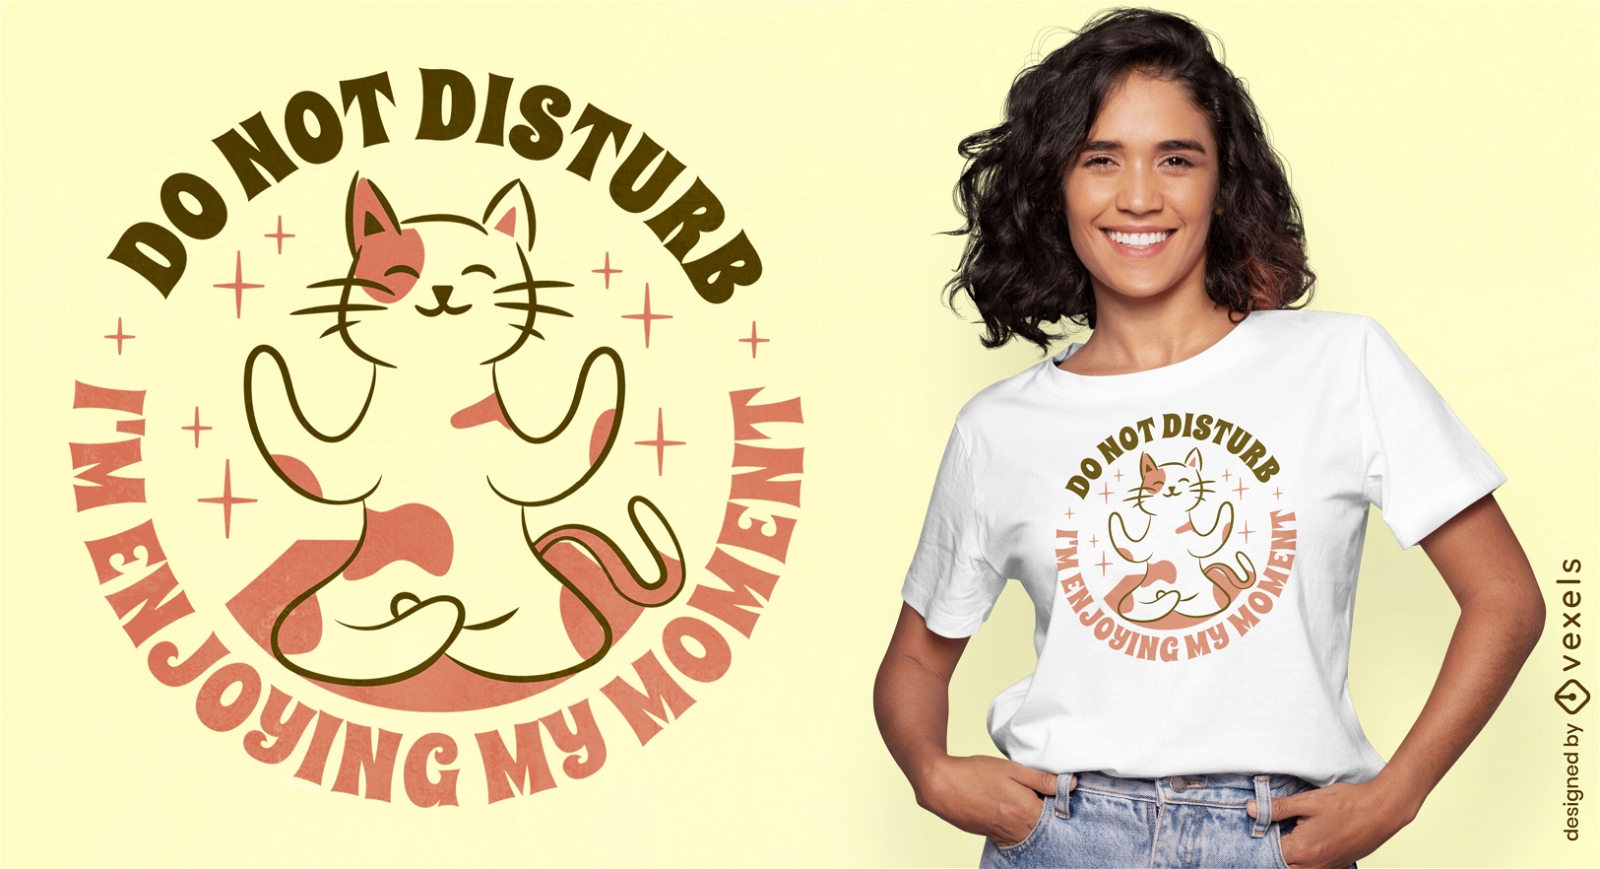 Cue gato animal fazendo design de camiseta de ioga